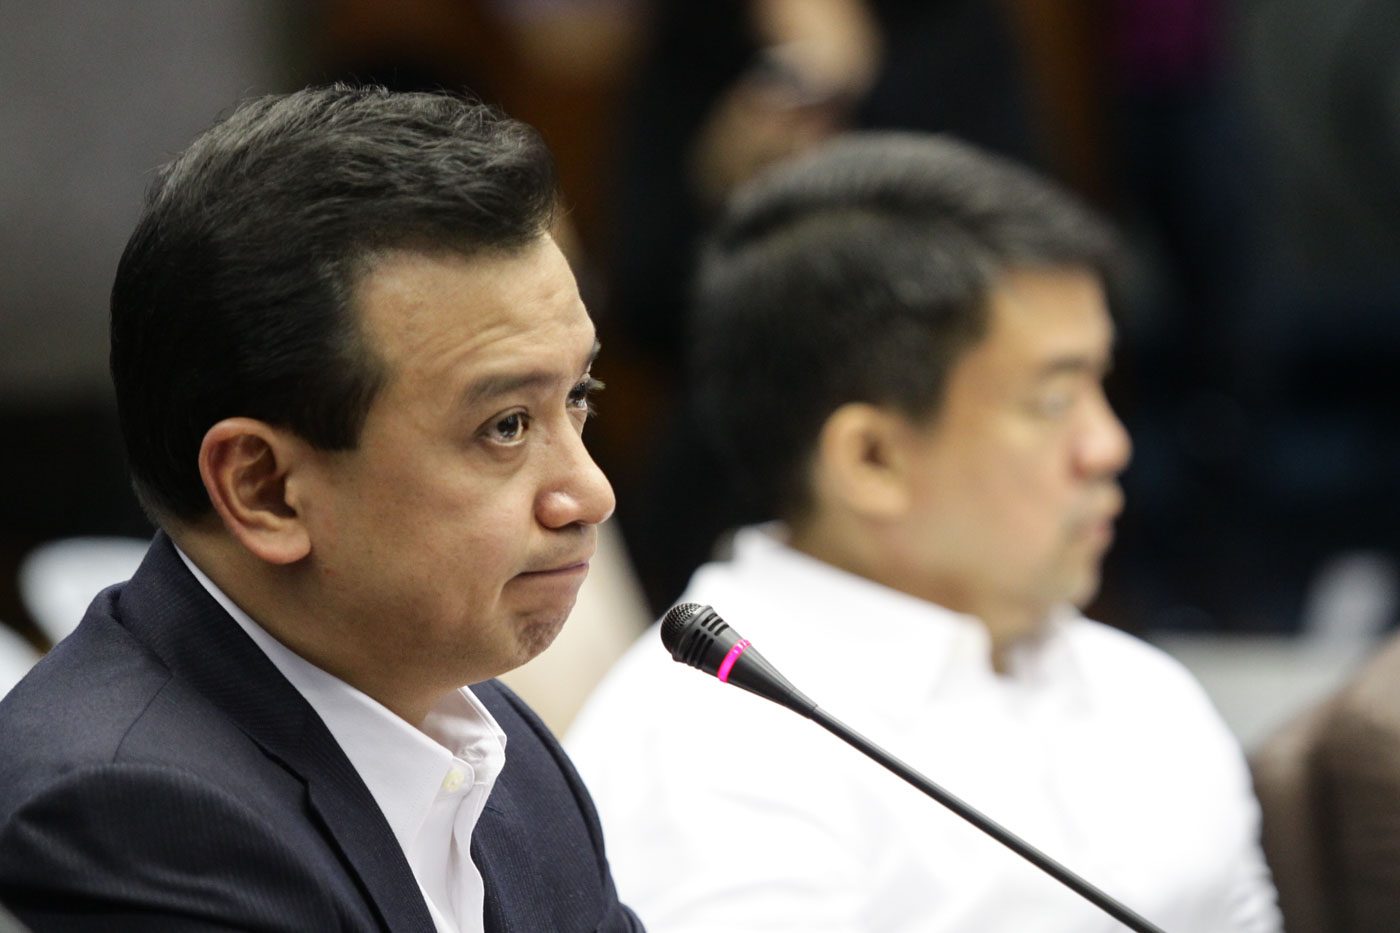 Trillanes invokes parliamentary immunity in Binay libel case